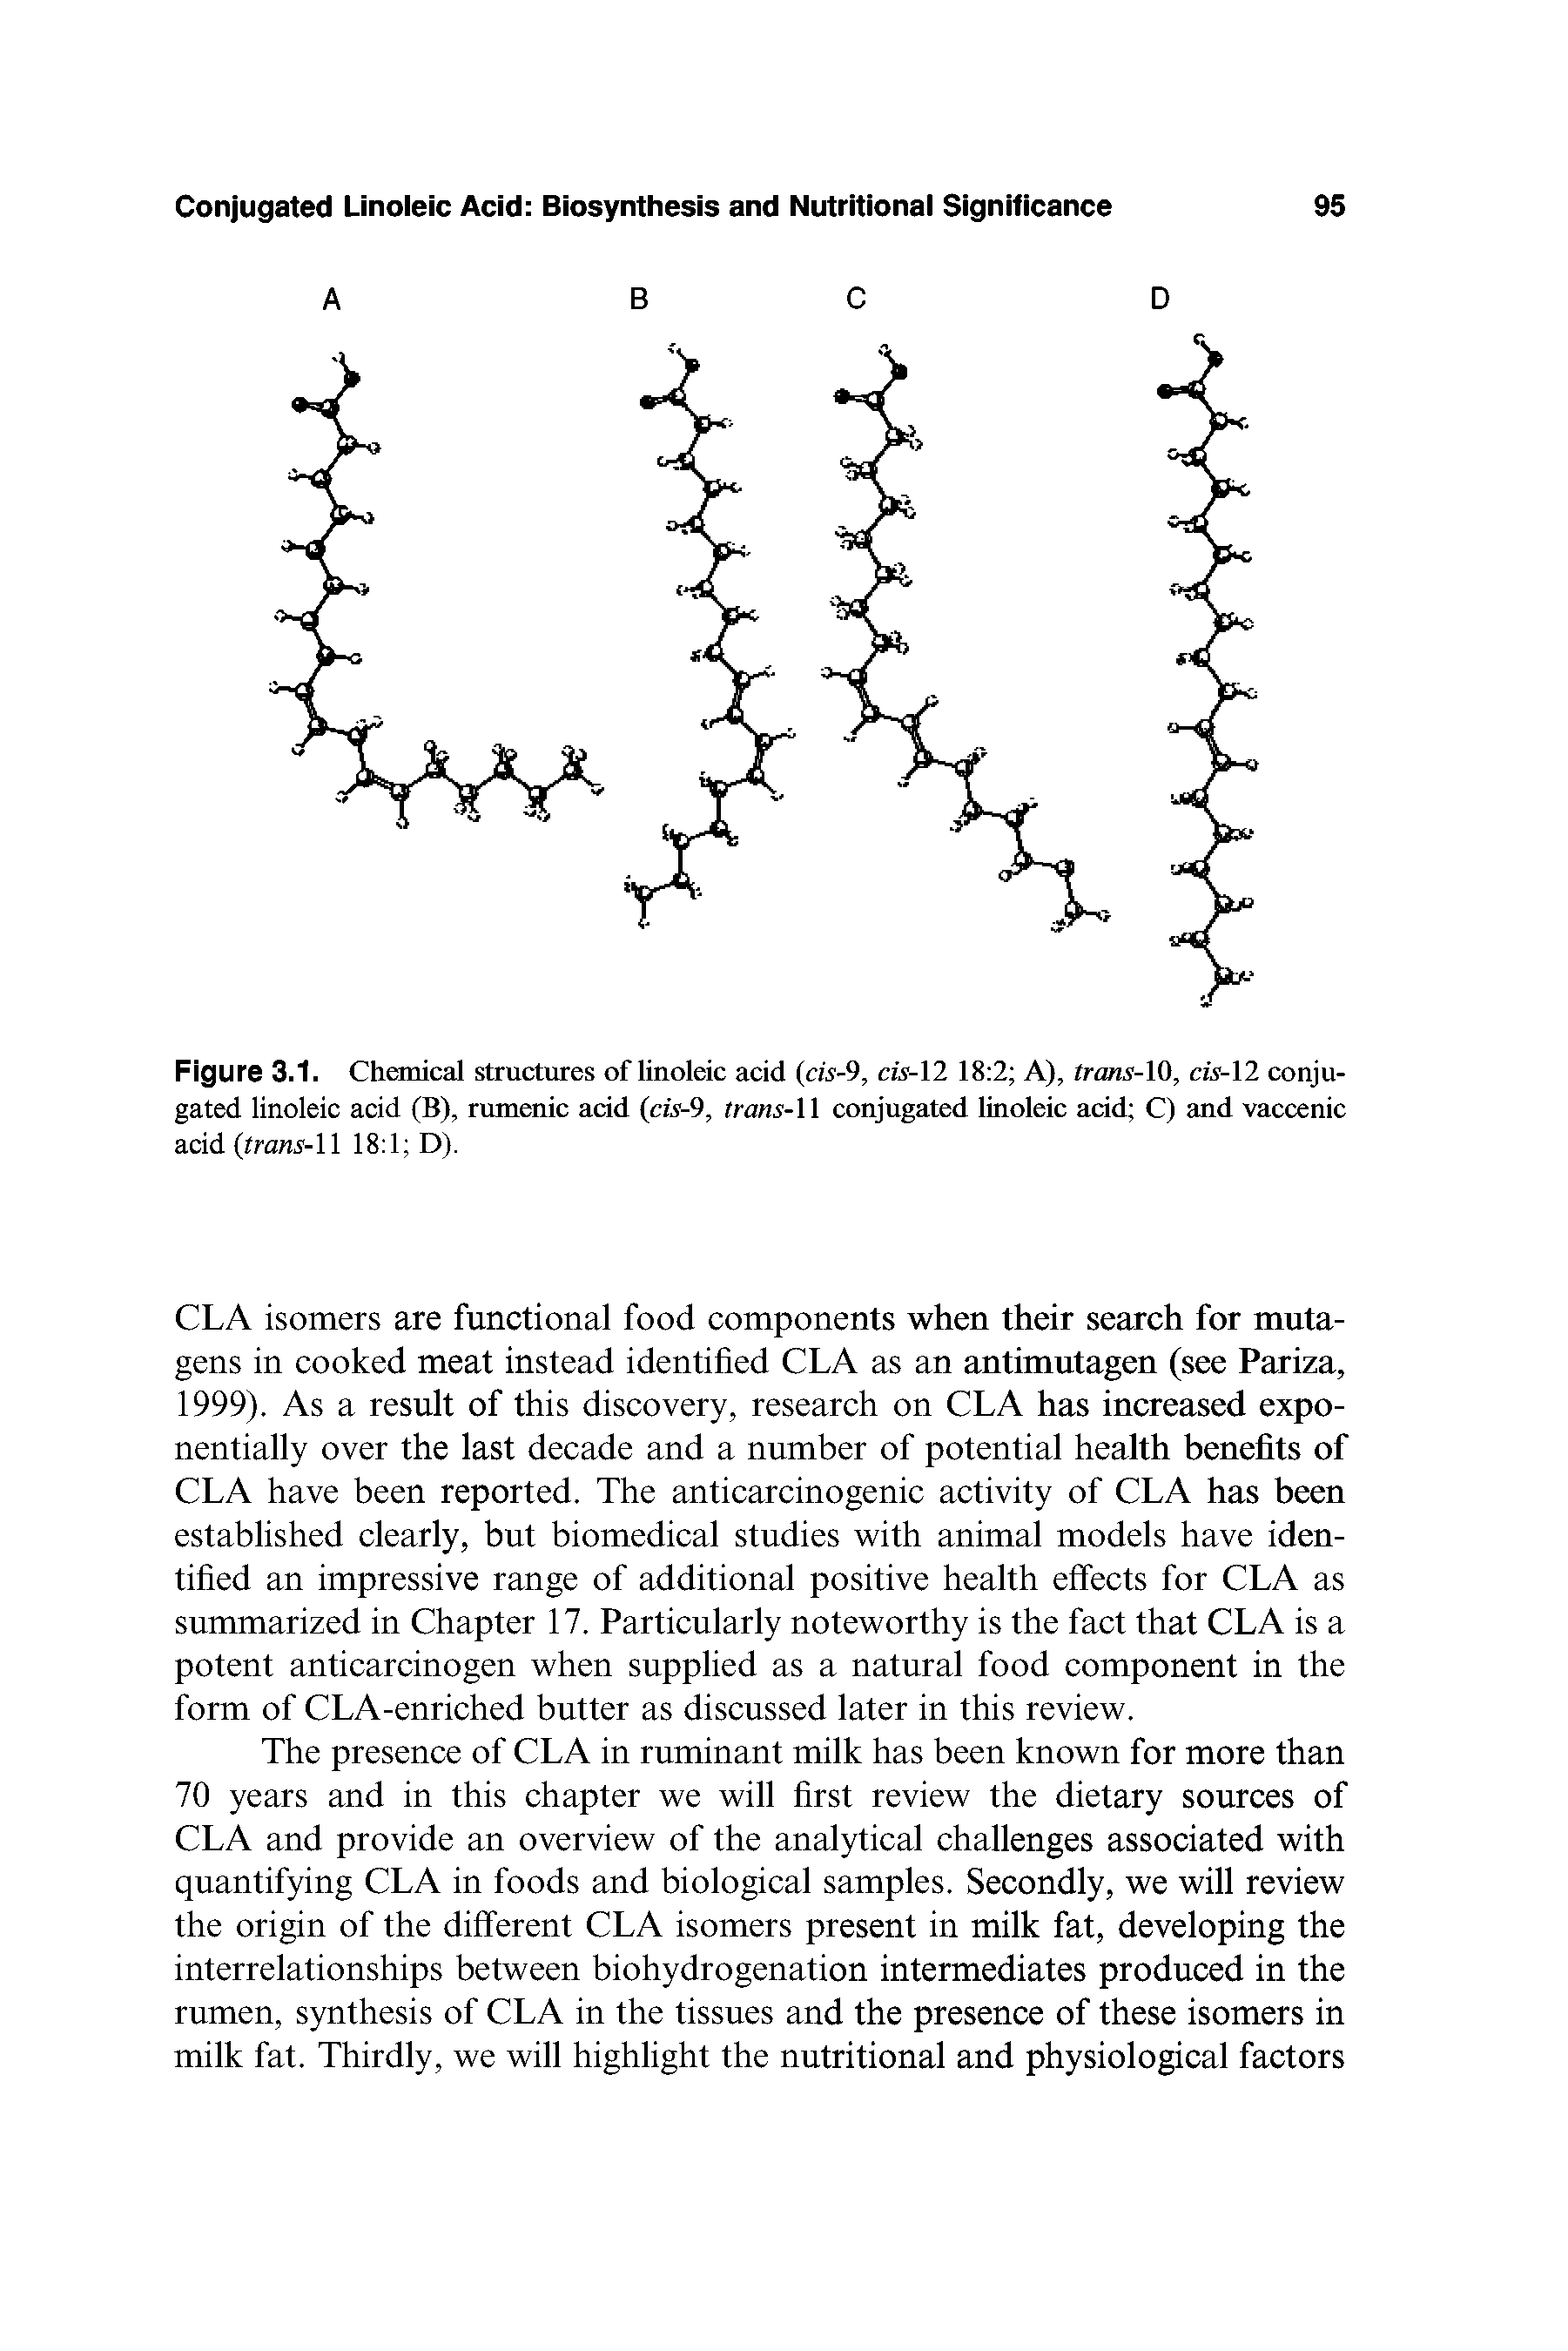 Figure 3.1. Chemical structures of linoleic acid (cis-9, cis-12 18 2 A), trans-10, cis-12 conjugated linoleic acid (B), rumenic acid (cis-9, trans-11 conjugated linoleic acid C) and vaccenic acid (trans-11 18 1 D).